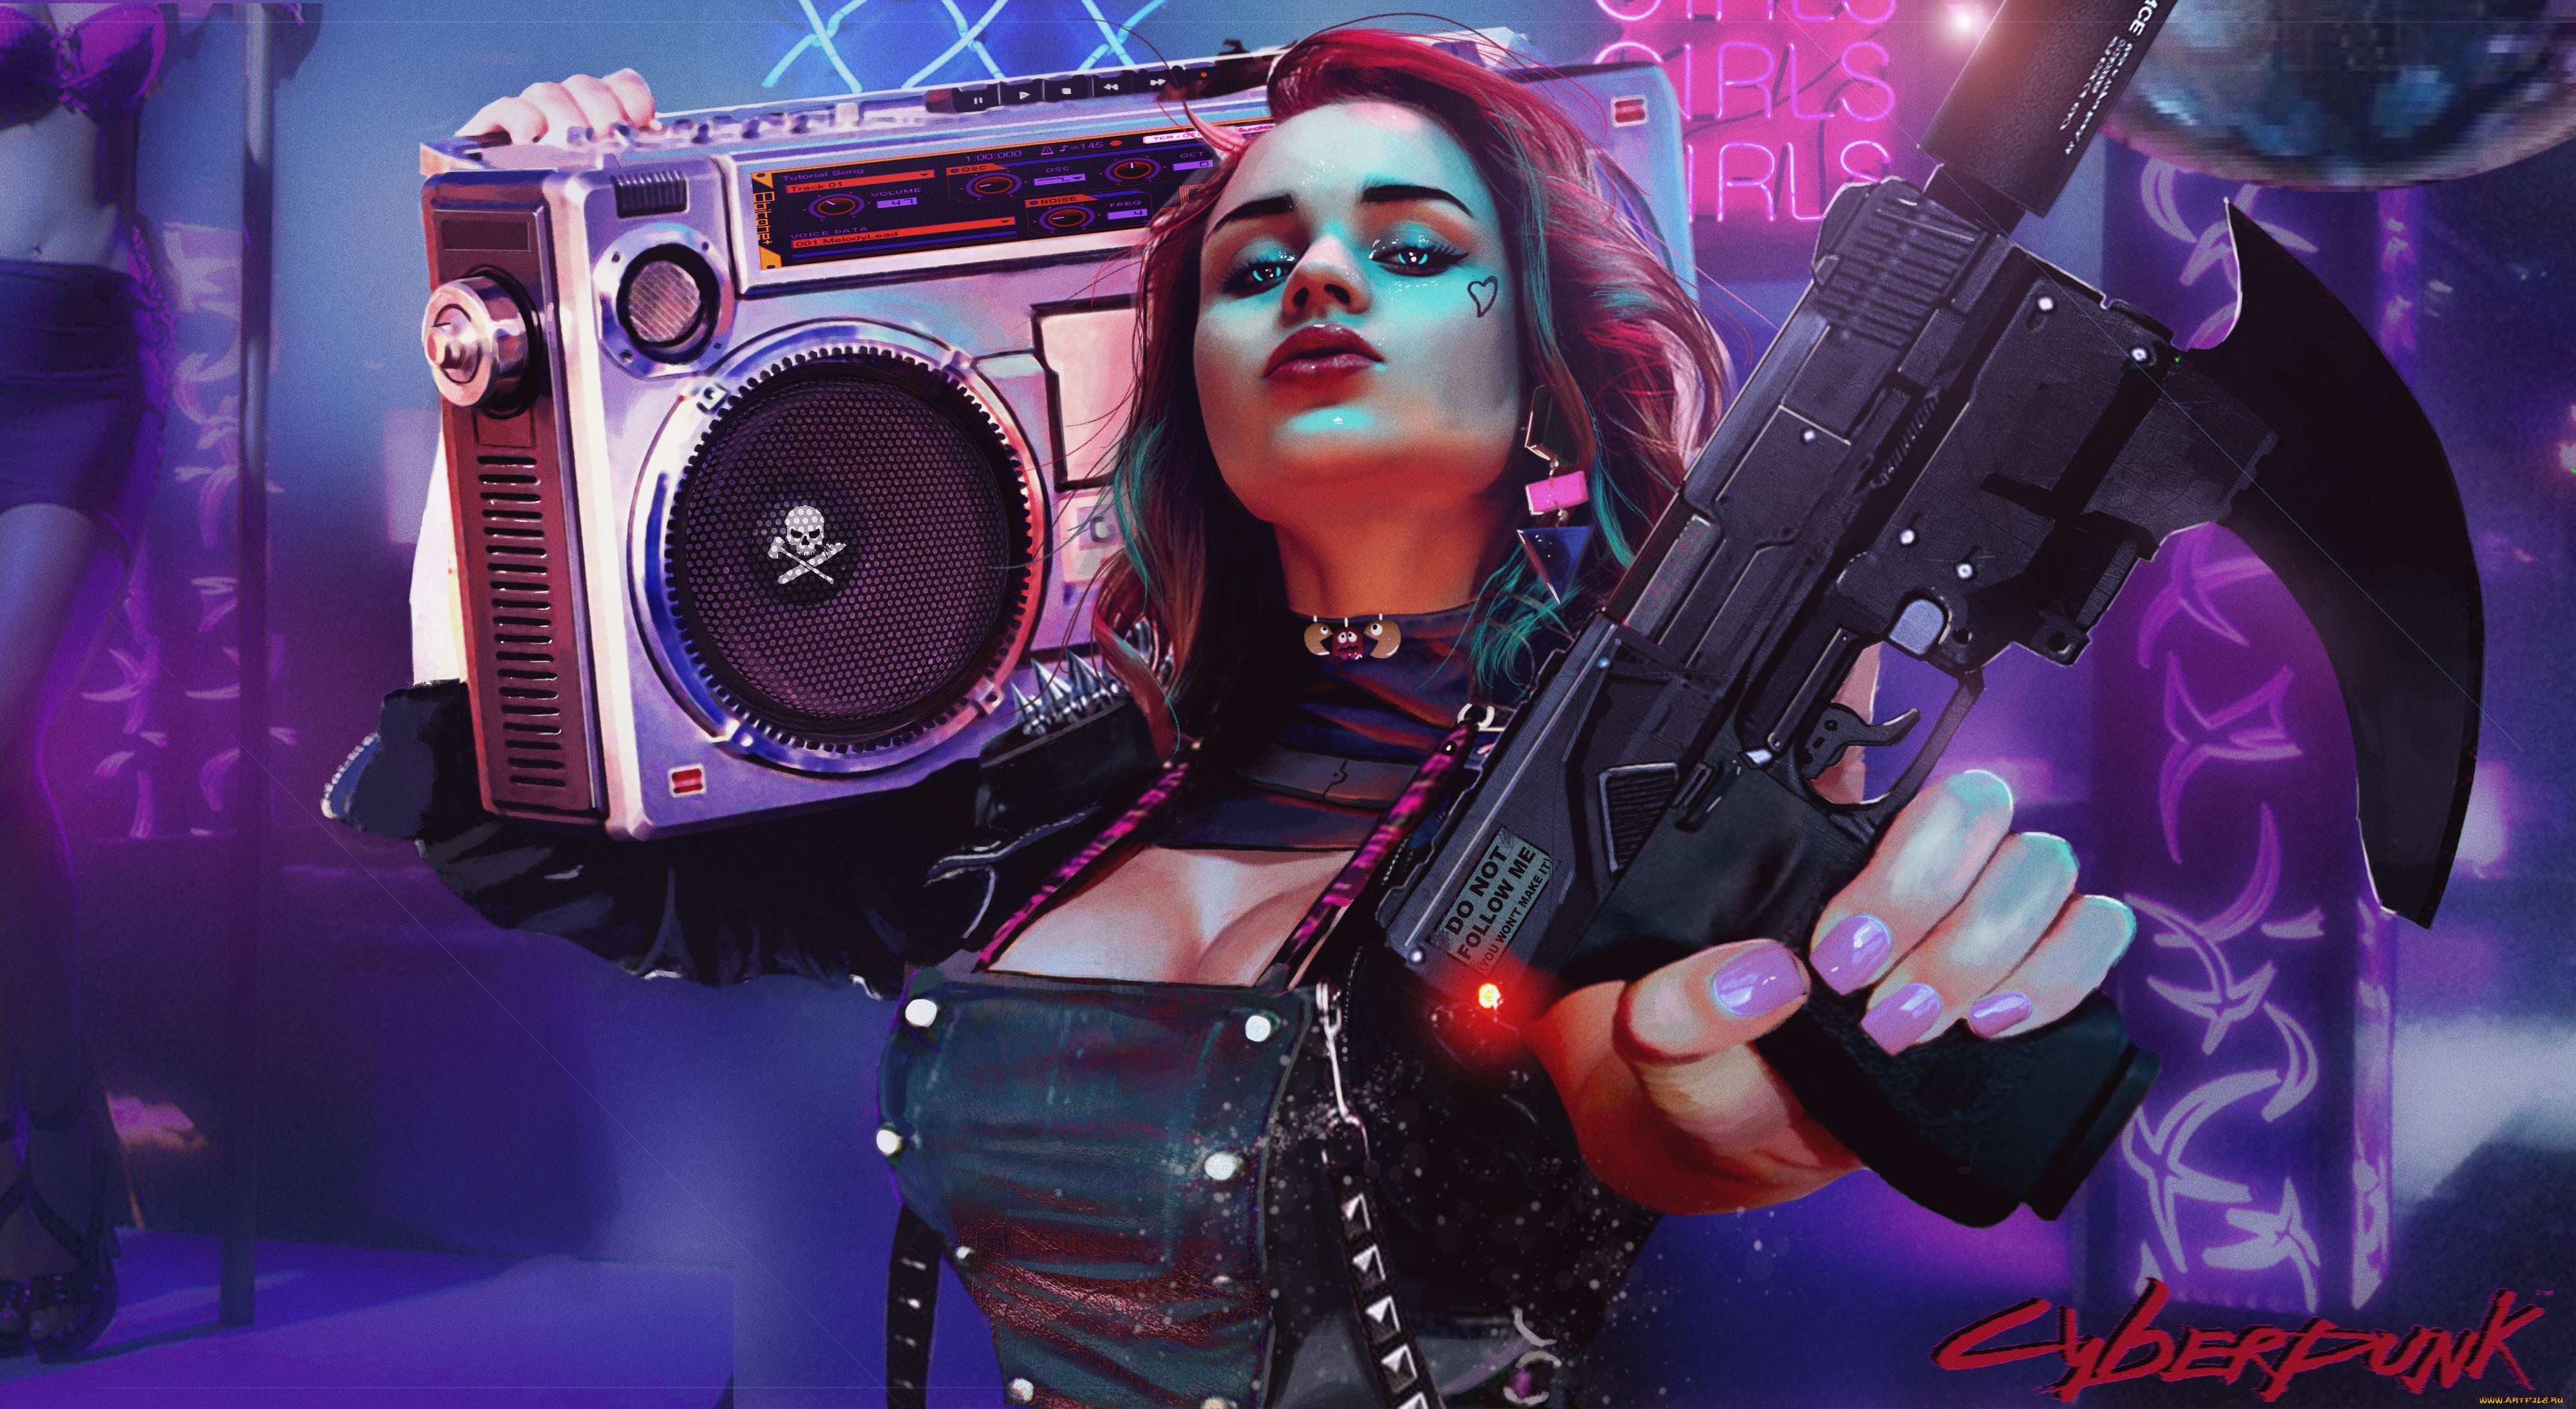 Cyberpunk girl 4K wallpaper download